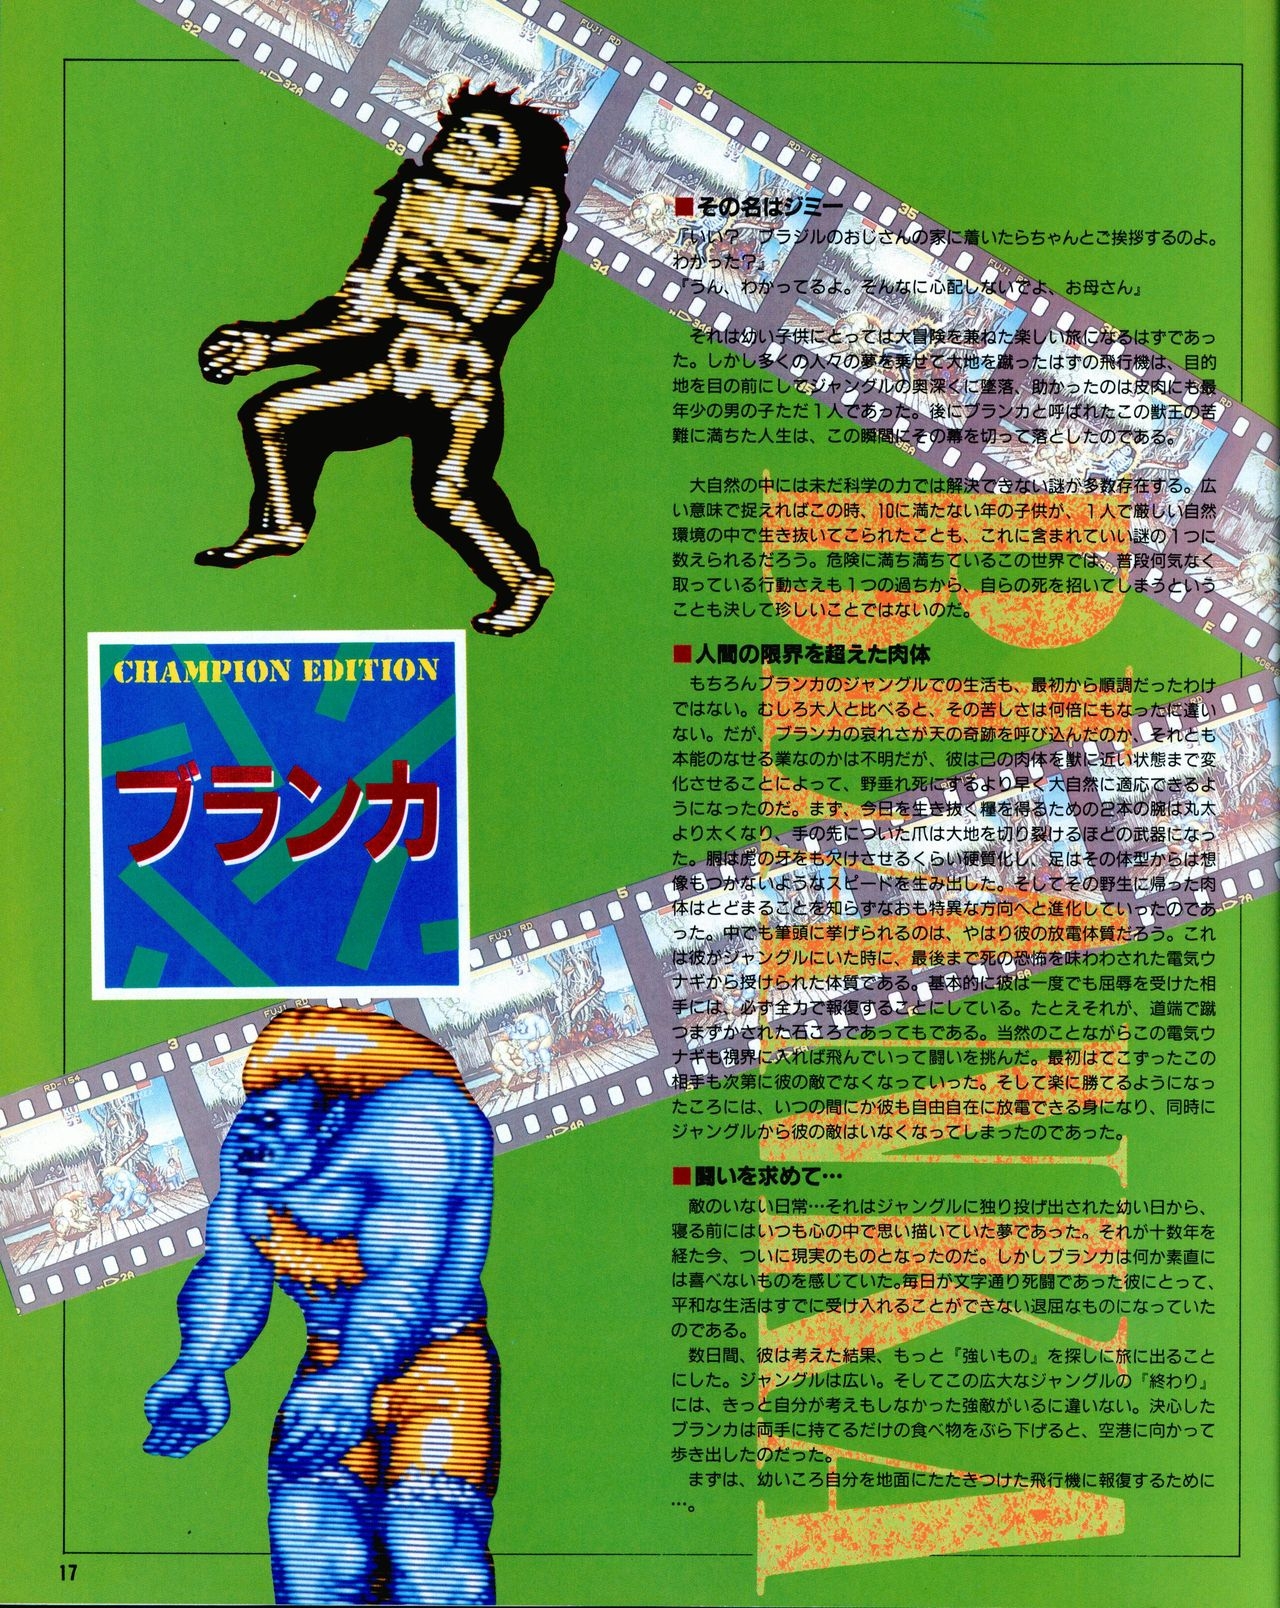 Street Fighter II Dash - Gamest special issue 77 18